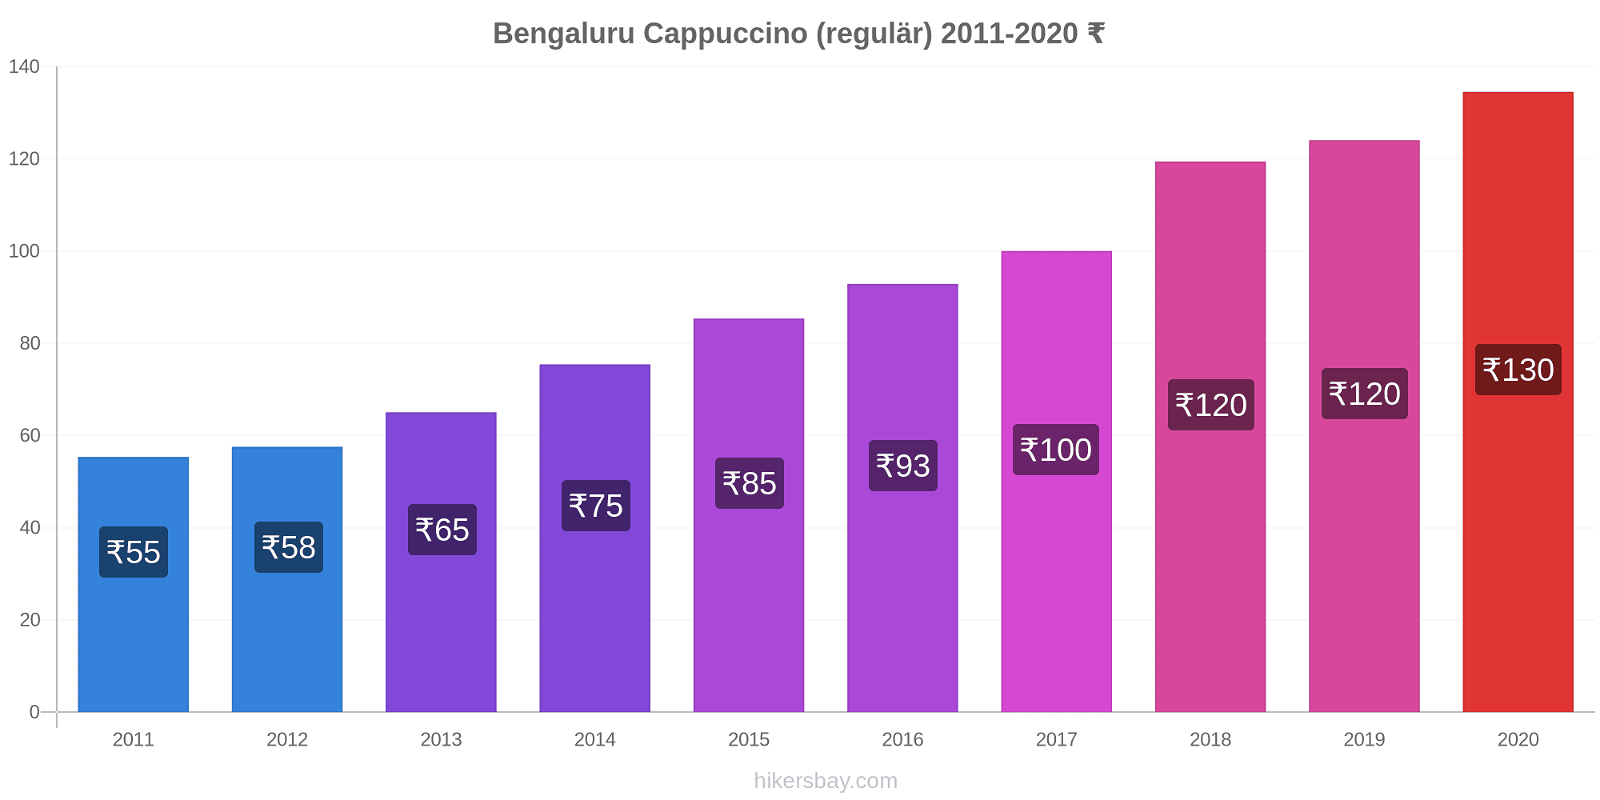 Bengaluru Preisänderungen Cappuccino (regulär) hikersbay.com